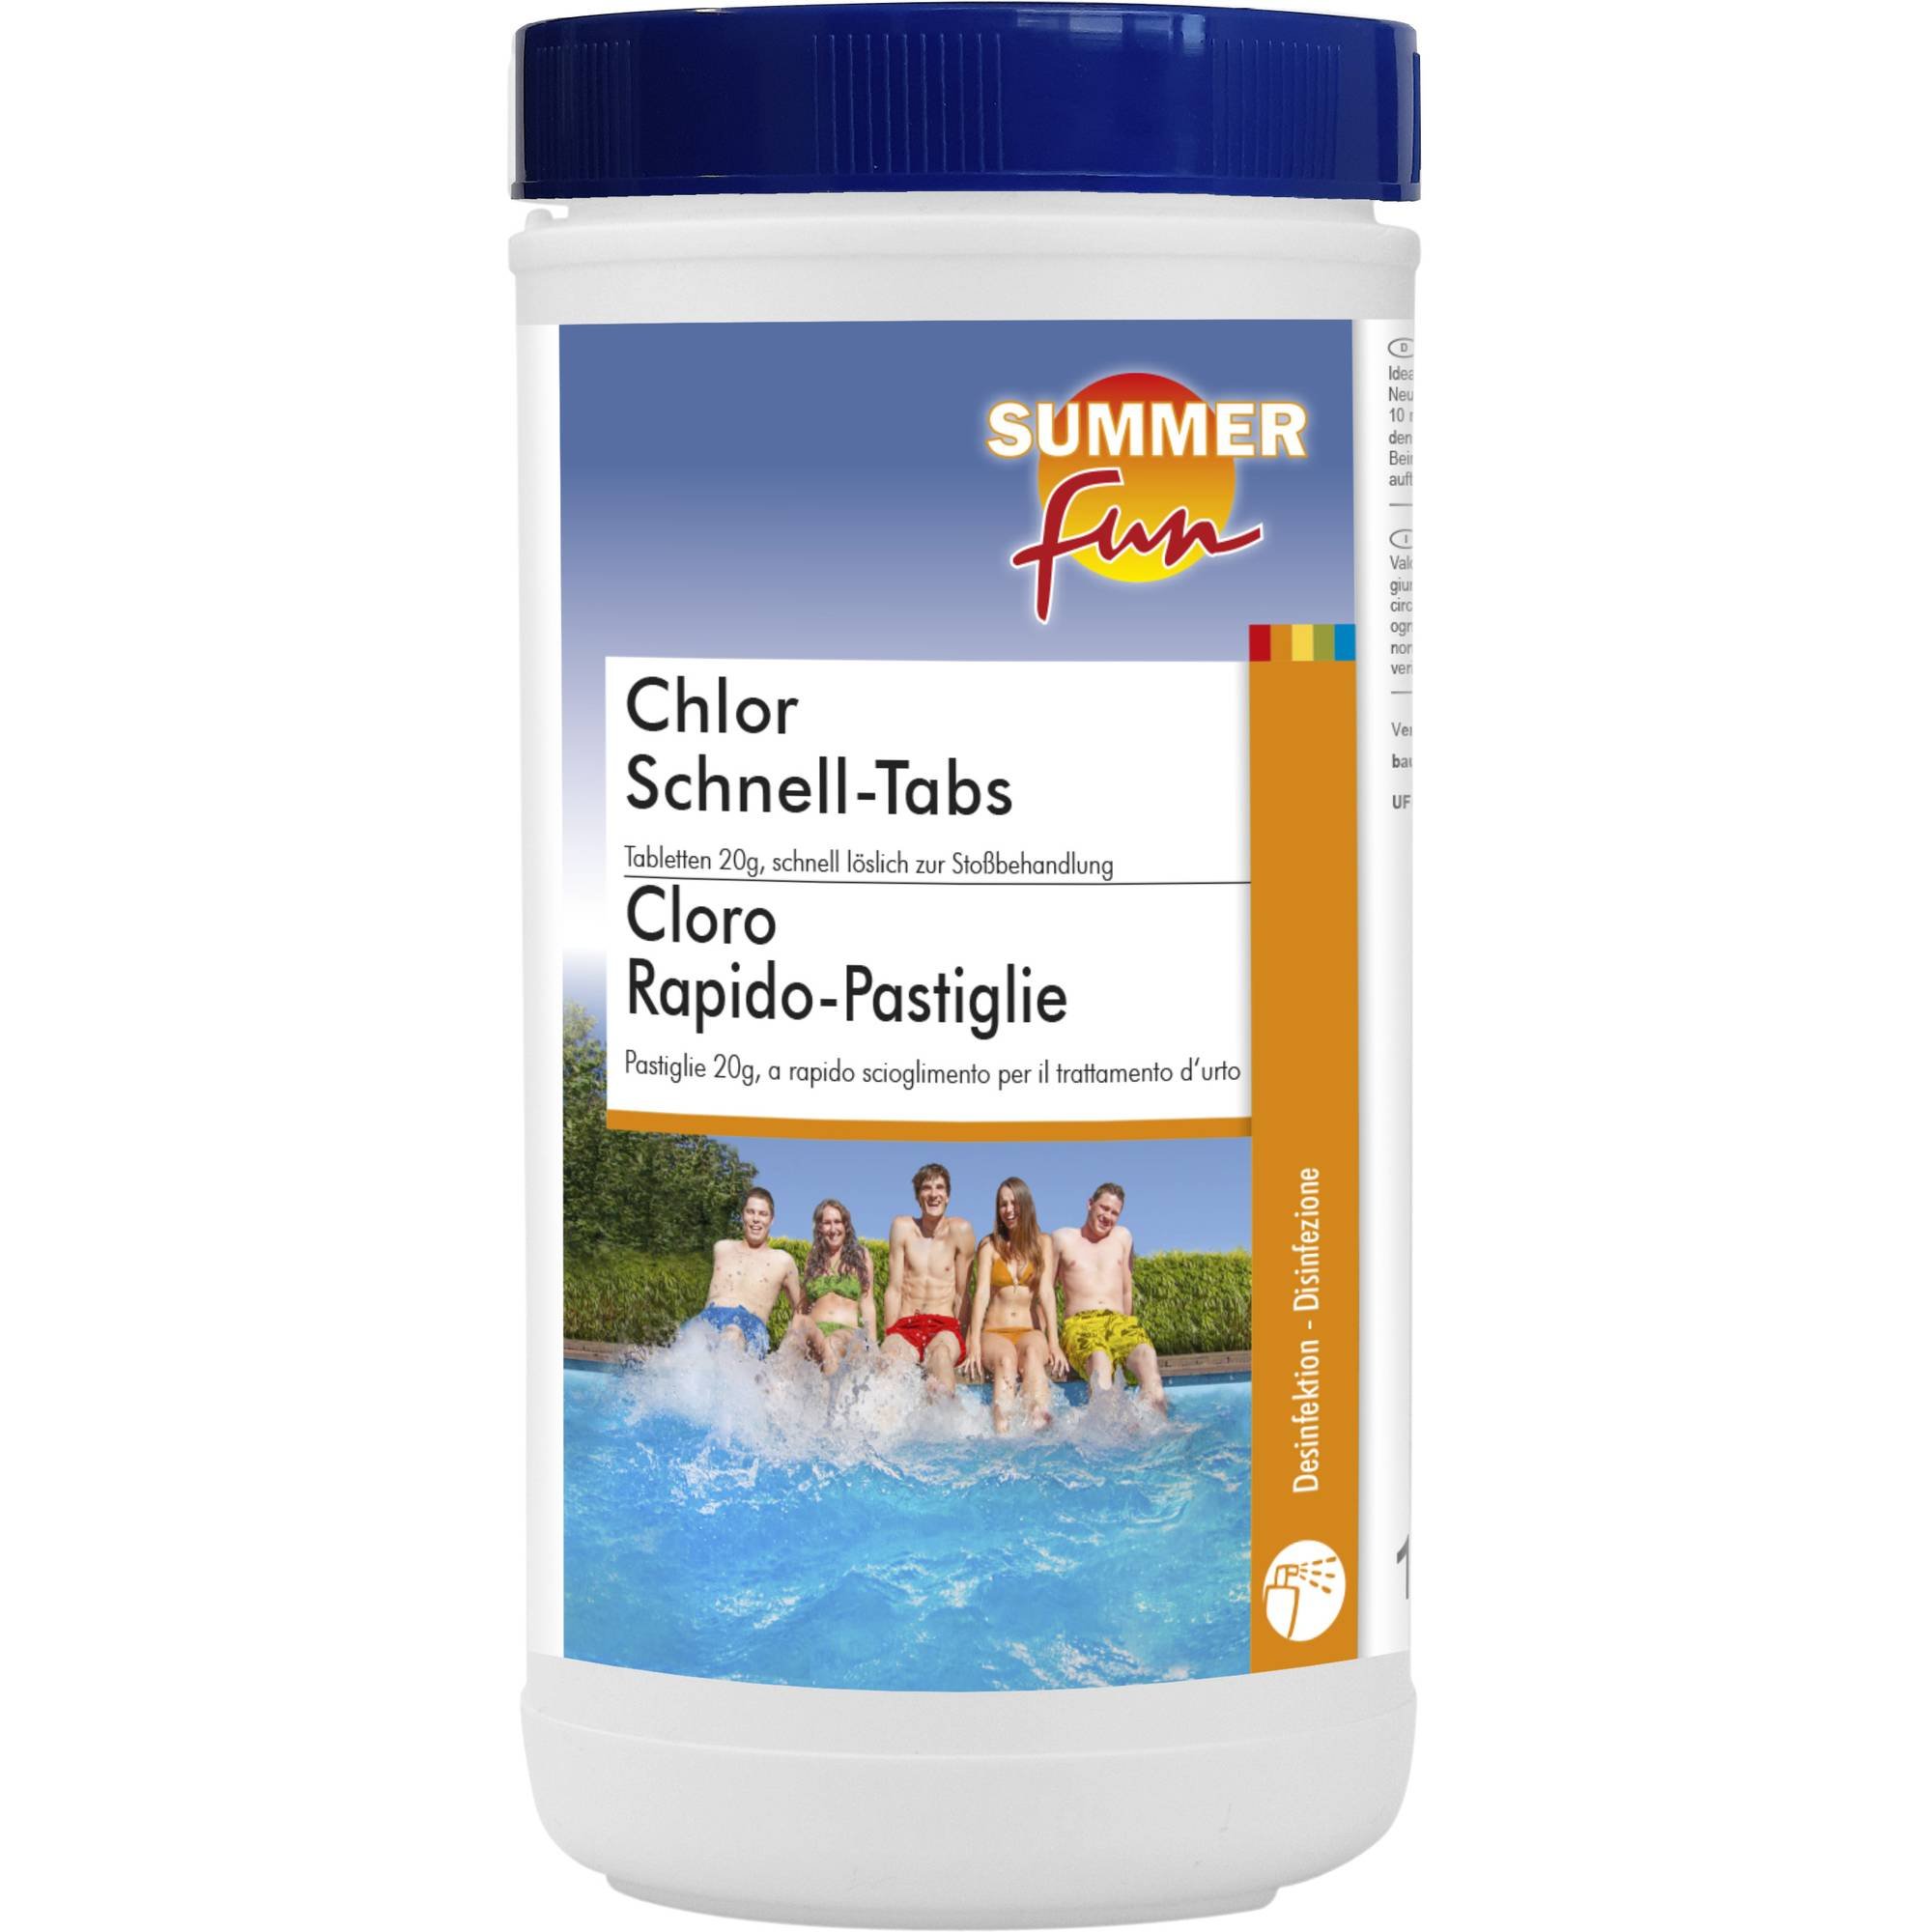 Summer Fun - Chlor Schnell-Tabs - 20g Tabletten, 1 kg